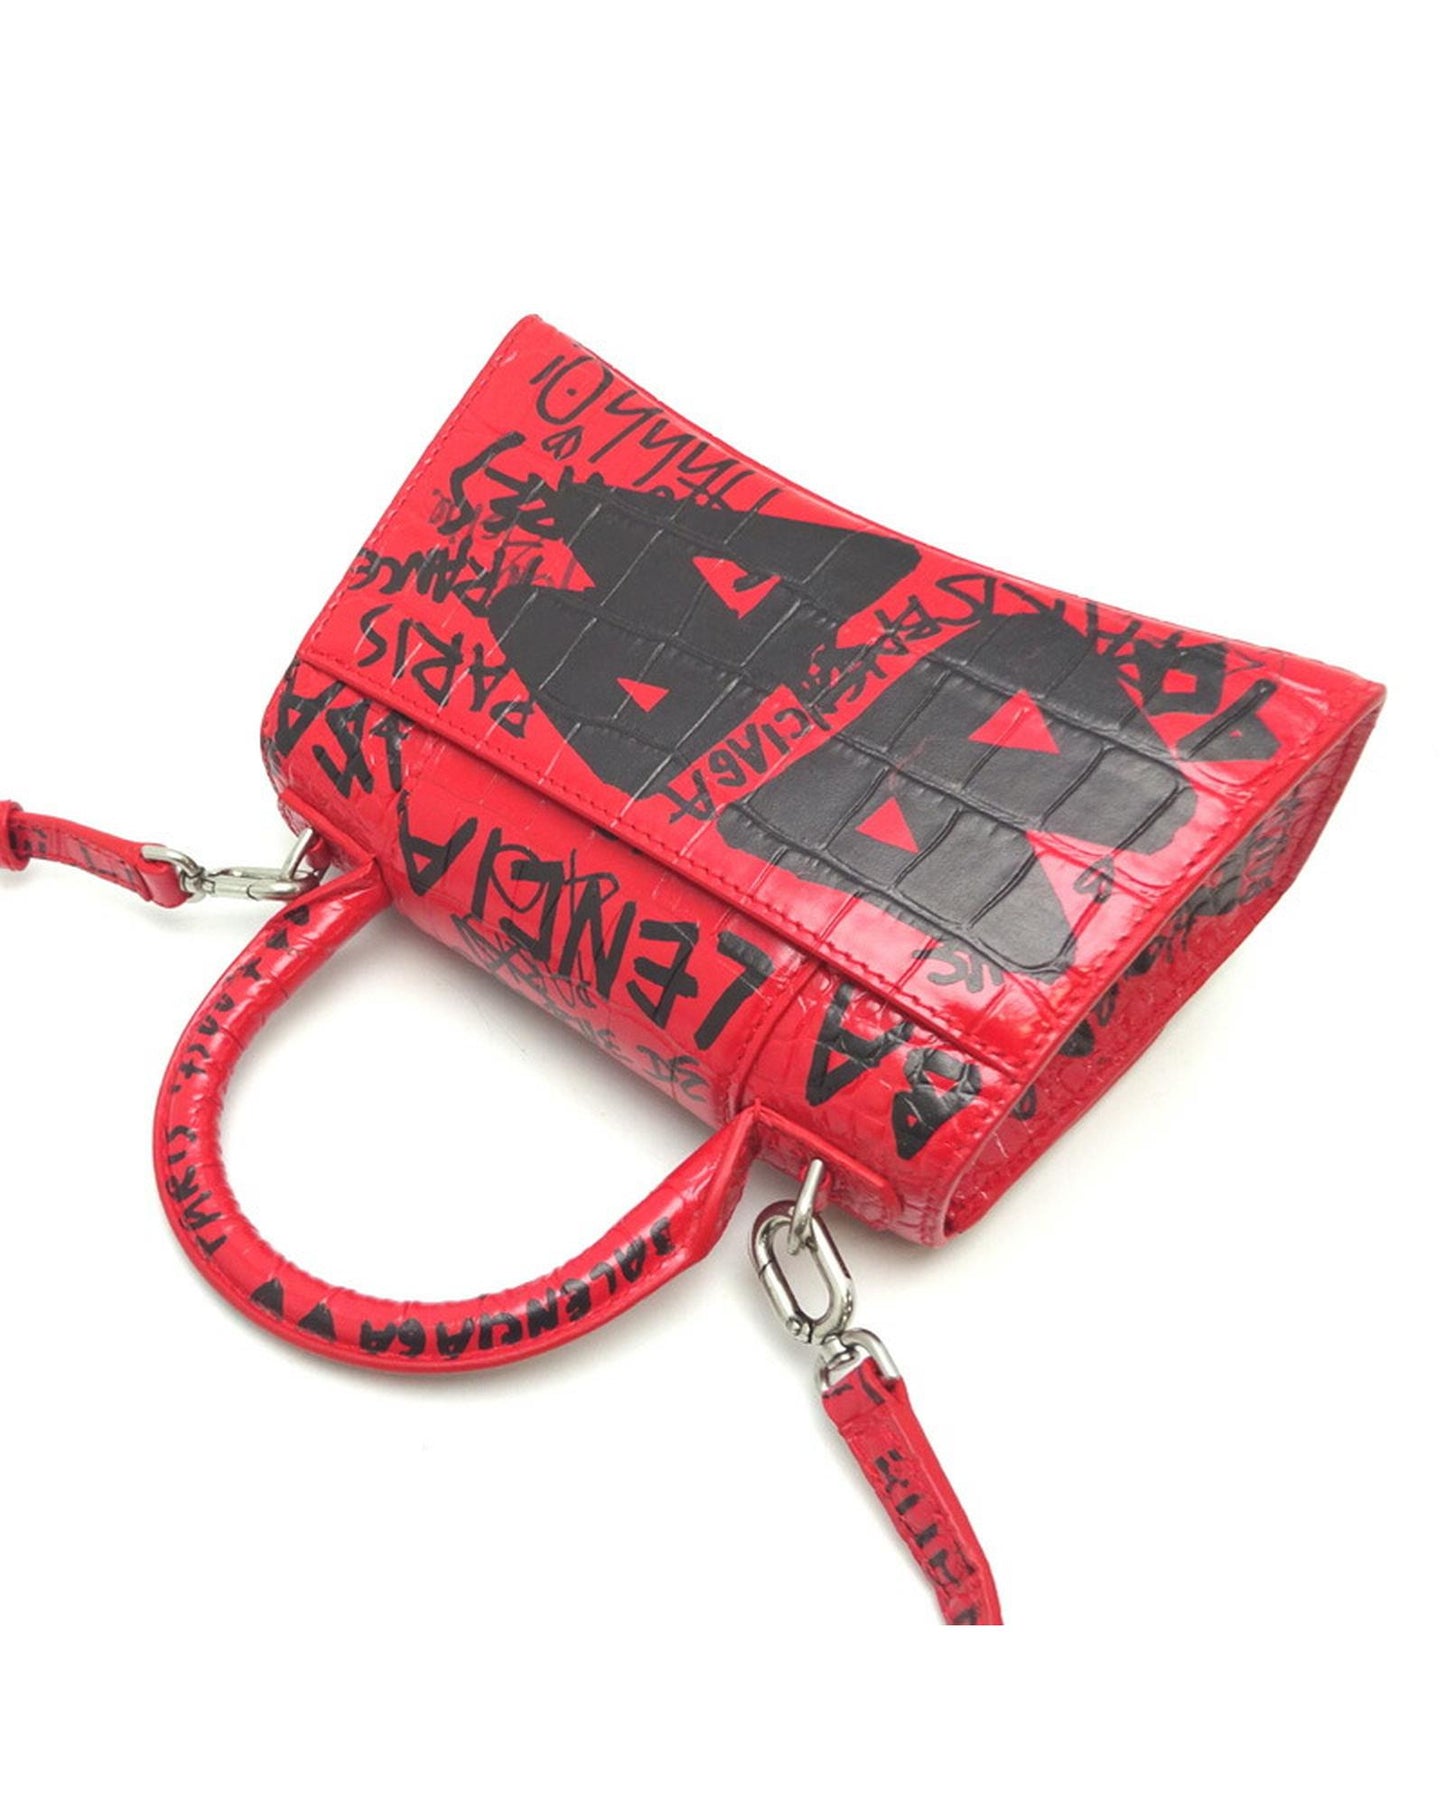 Balenciaga Women's Red Graffiti Hourglass XS Handbag in Excellent Condition in Red